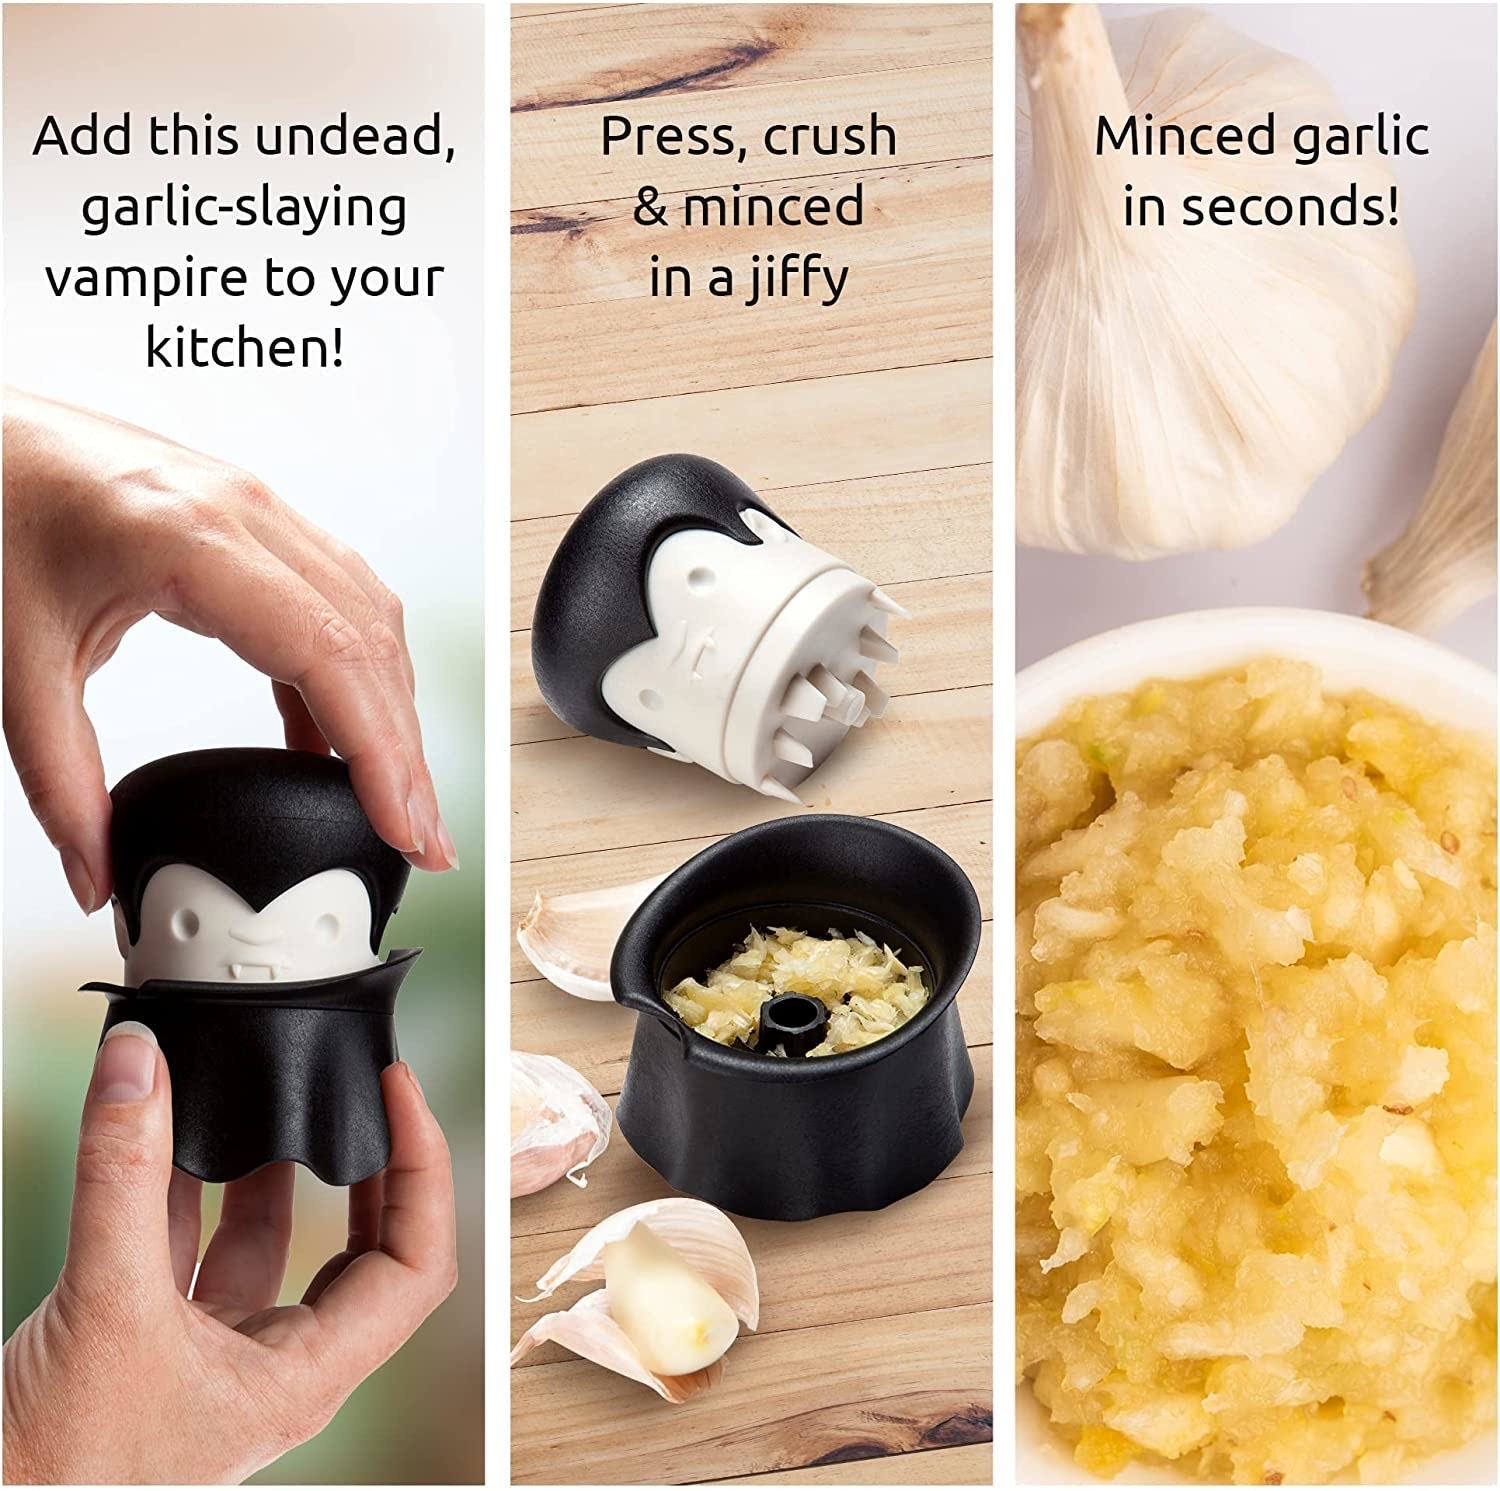 infographic showing how to add garlic to the vampire-shaped garlic crusher